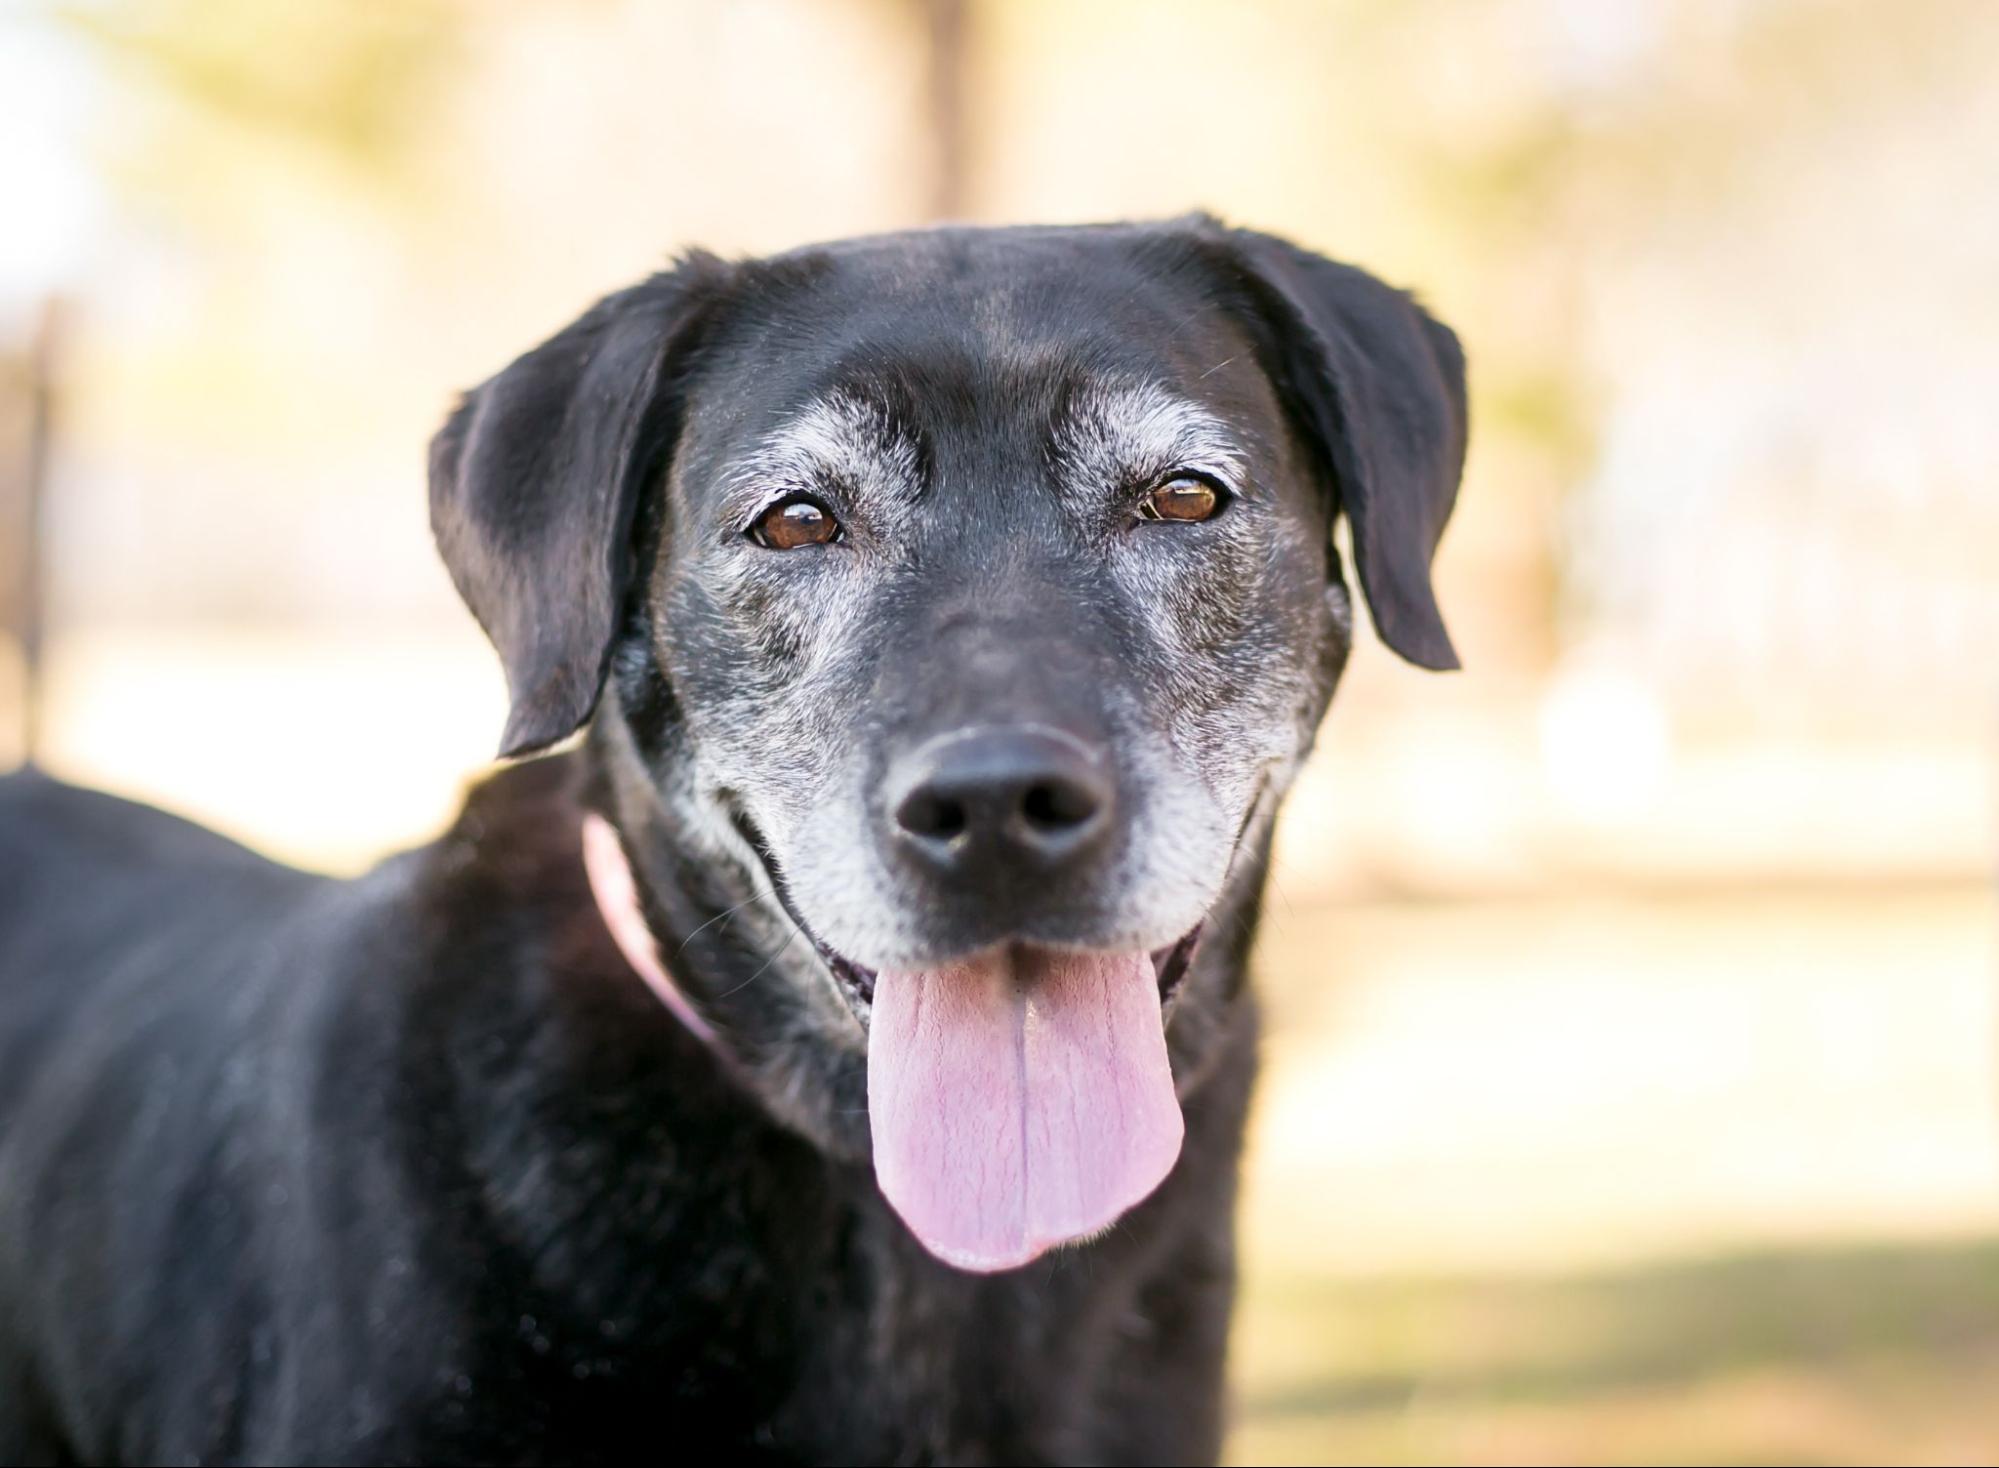 An older black dog with grey facial hair smiles at the camera